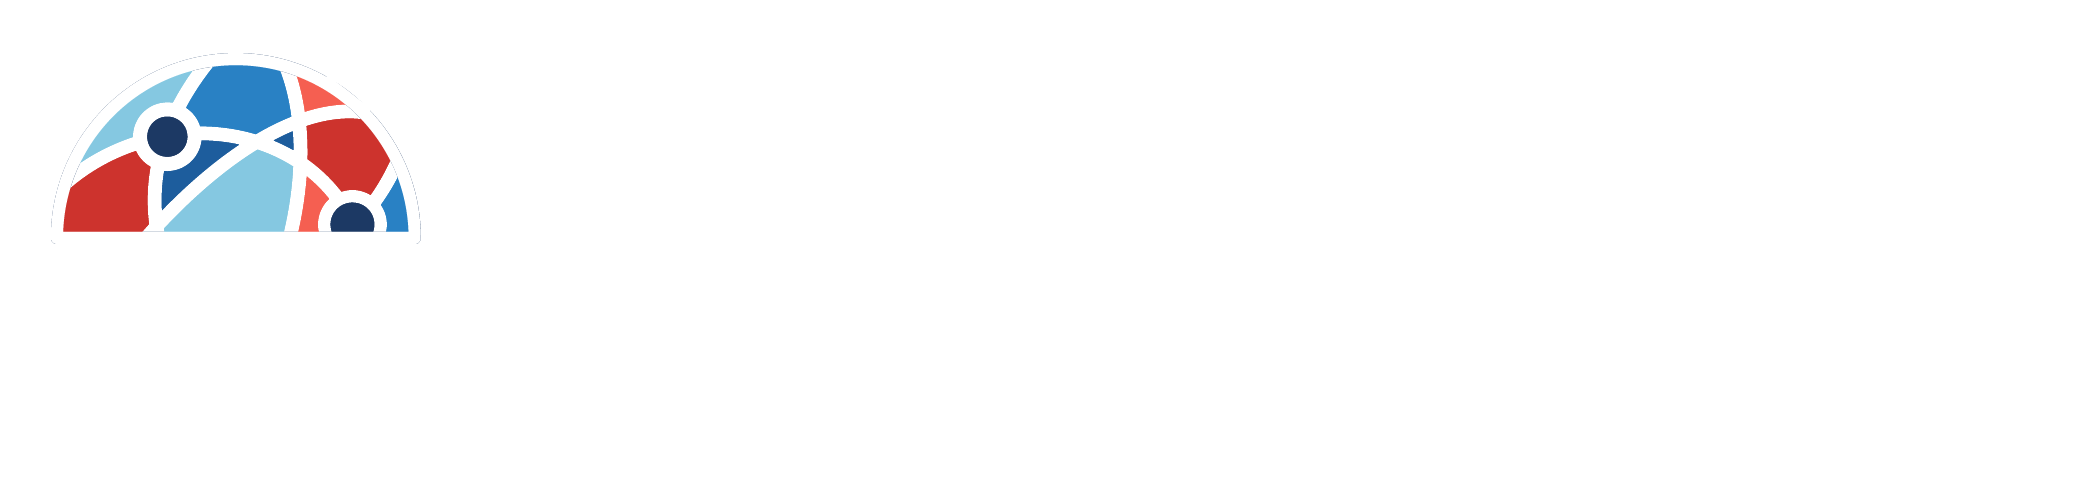 NIO RGB logo for dark background